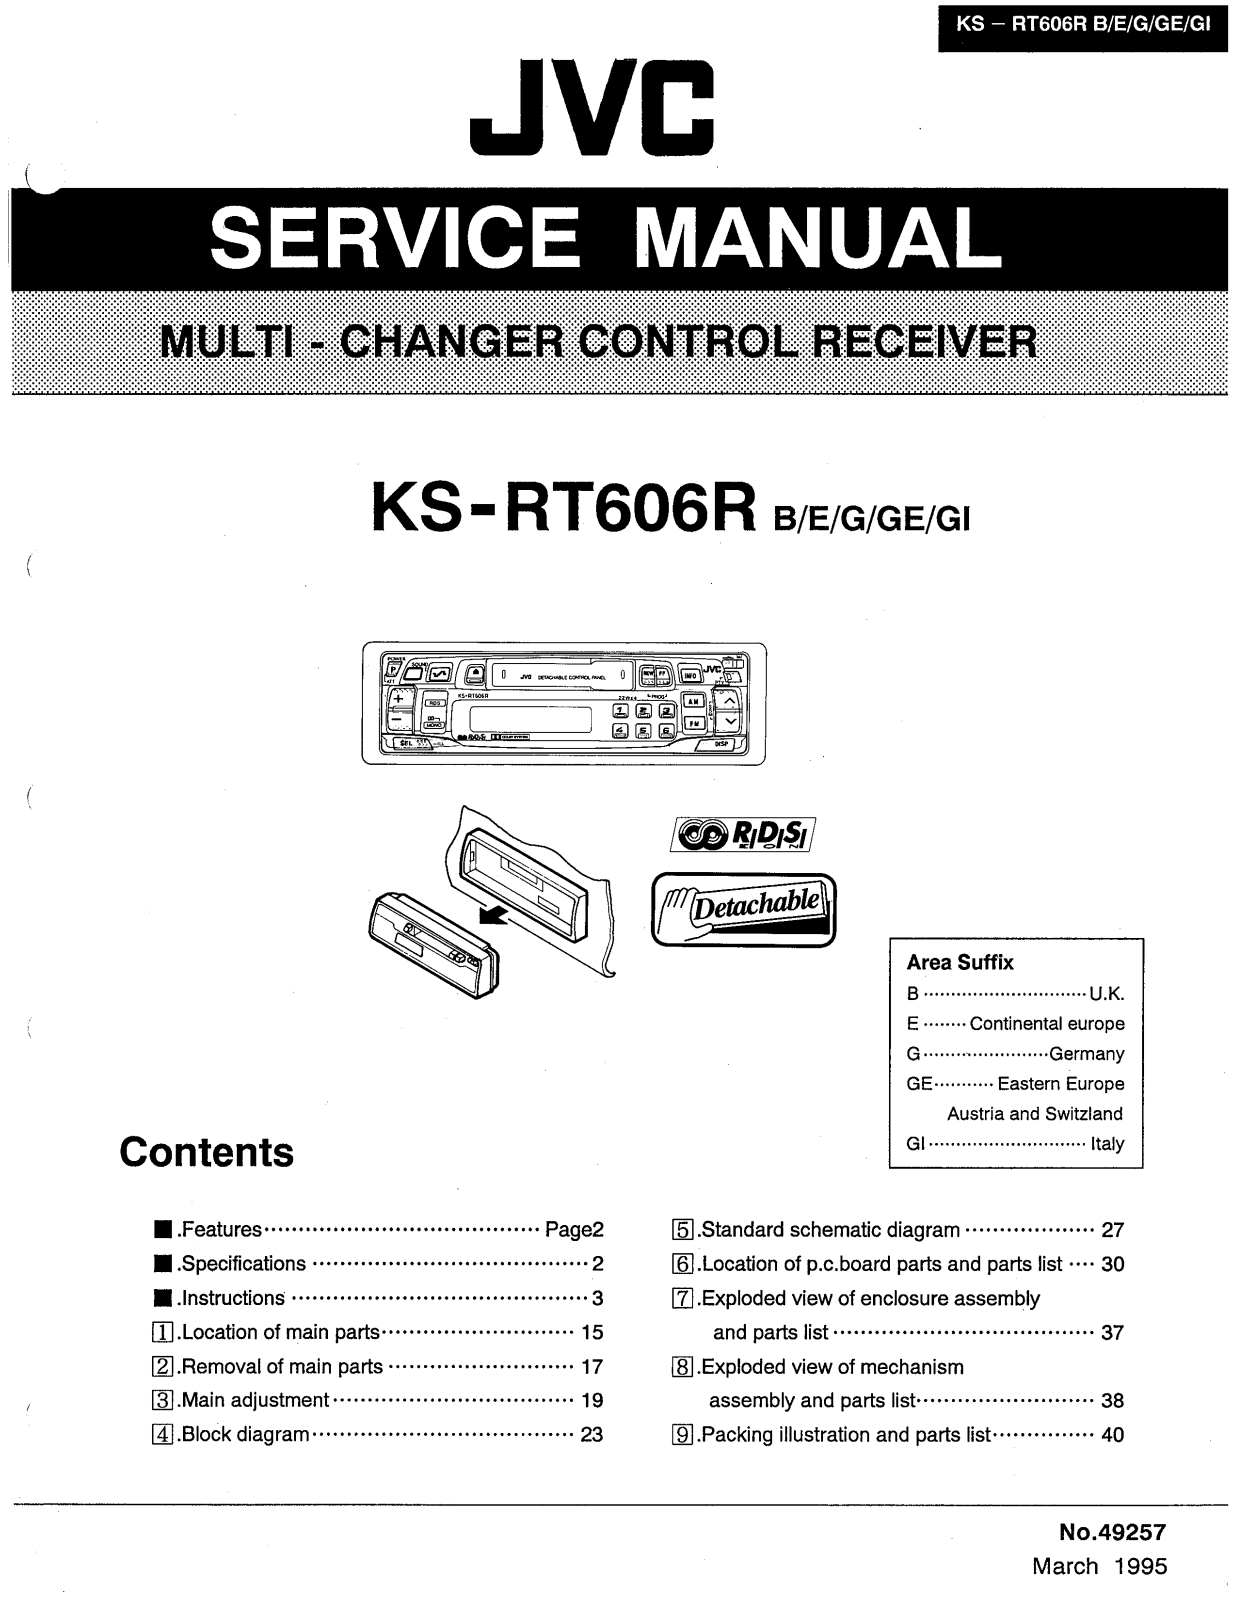 JVC KS-RT606RB, KS-RT606RE, KS-RT606RG, KS-RT606RGE, KS-RT606RGI Service Manual